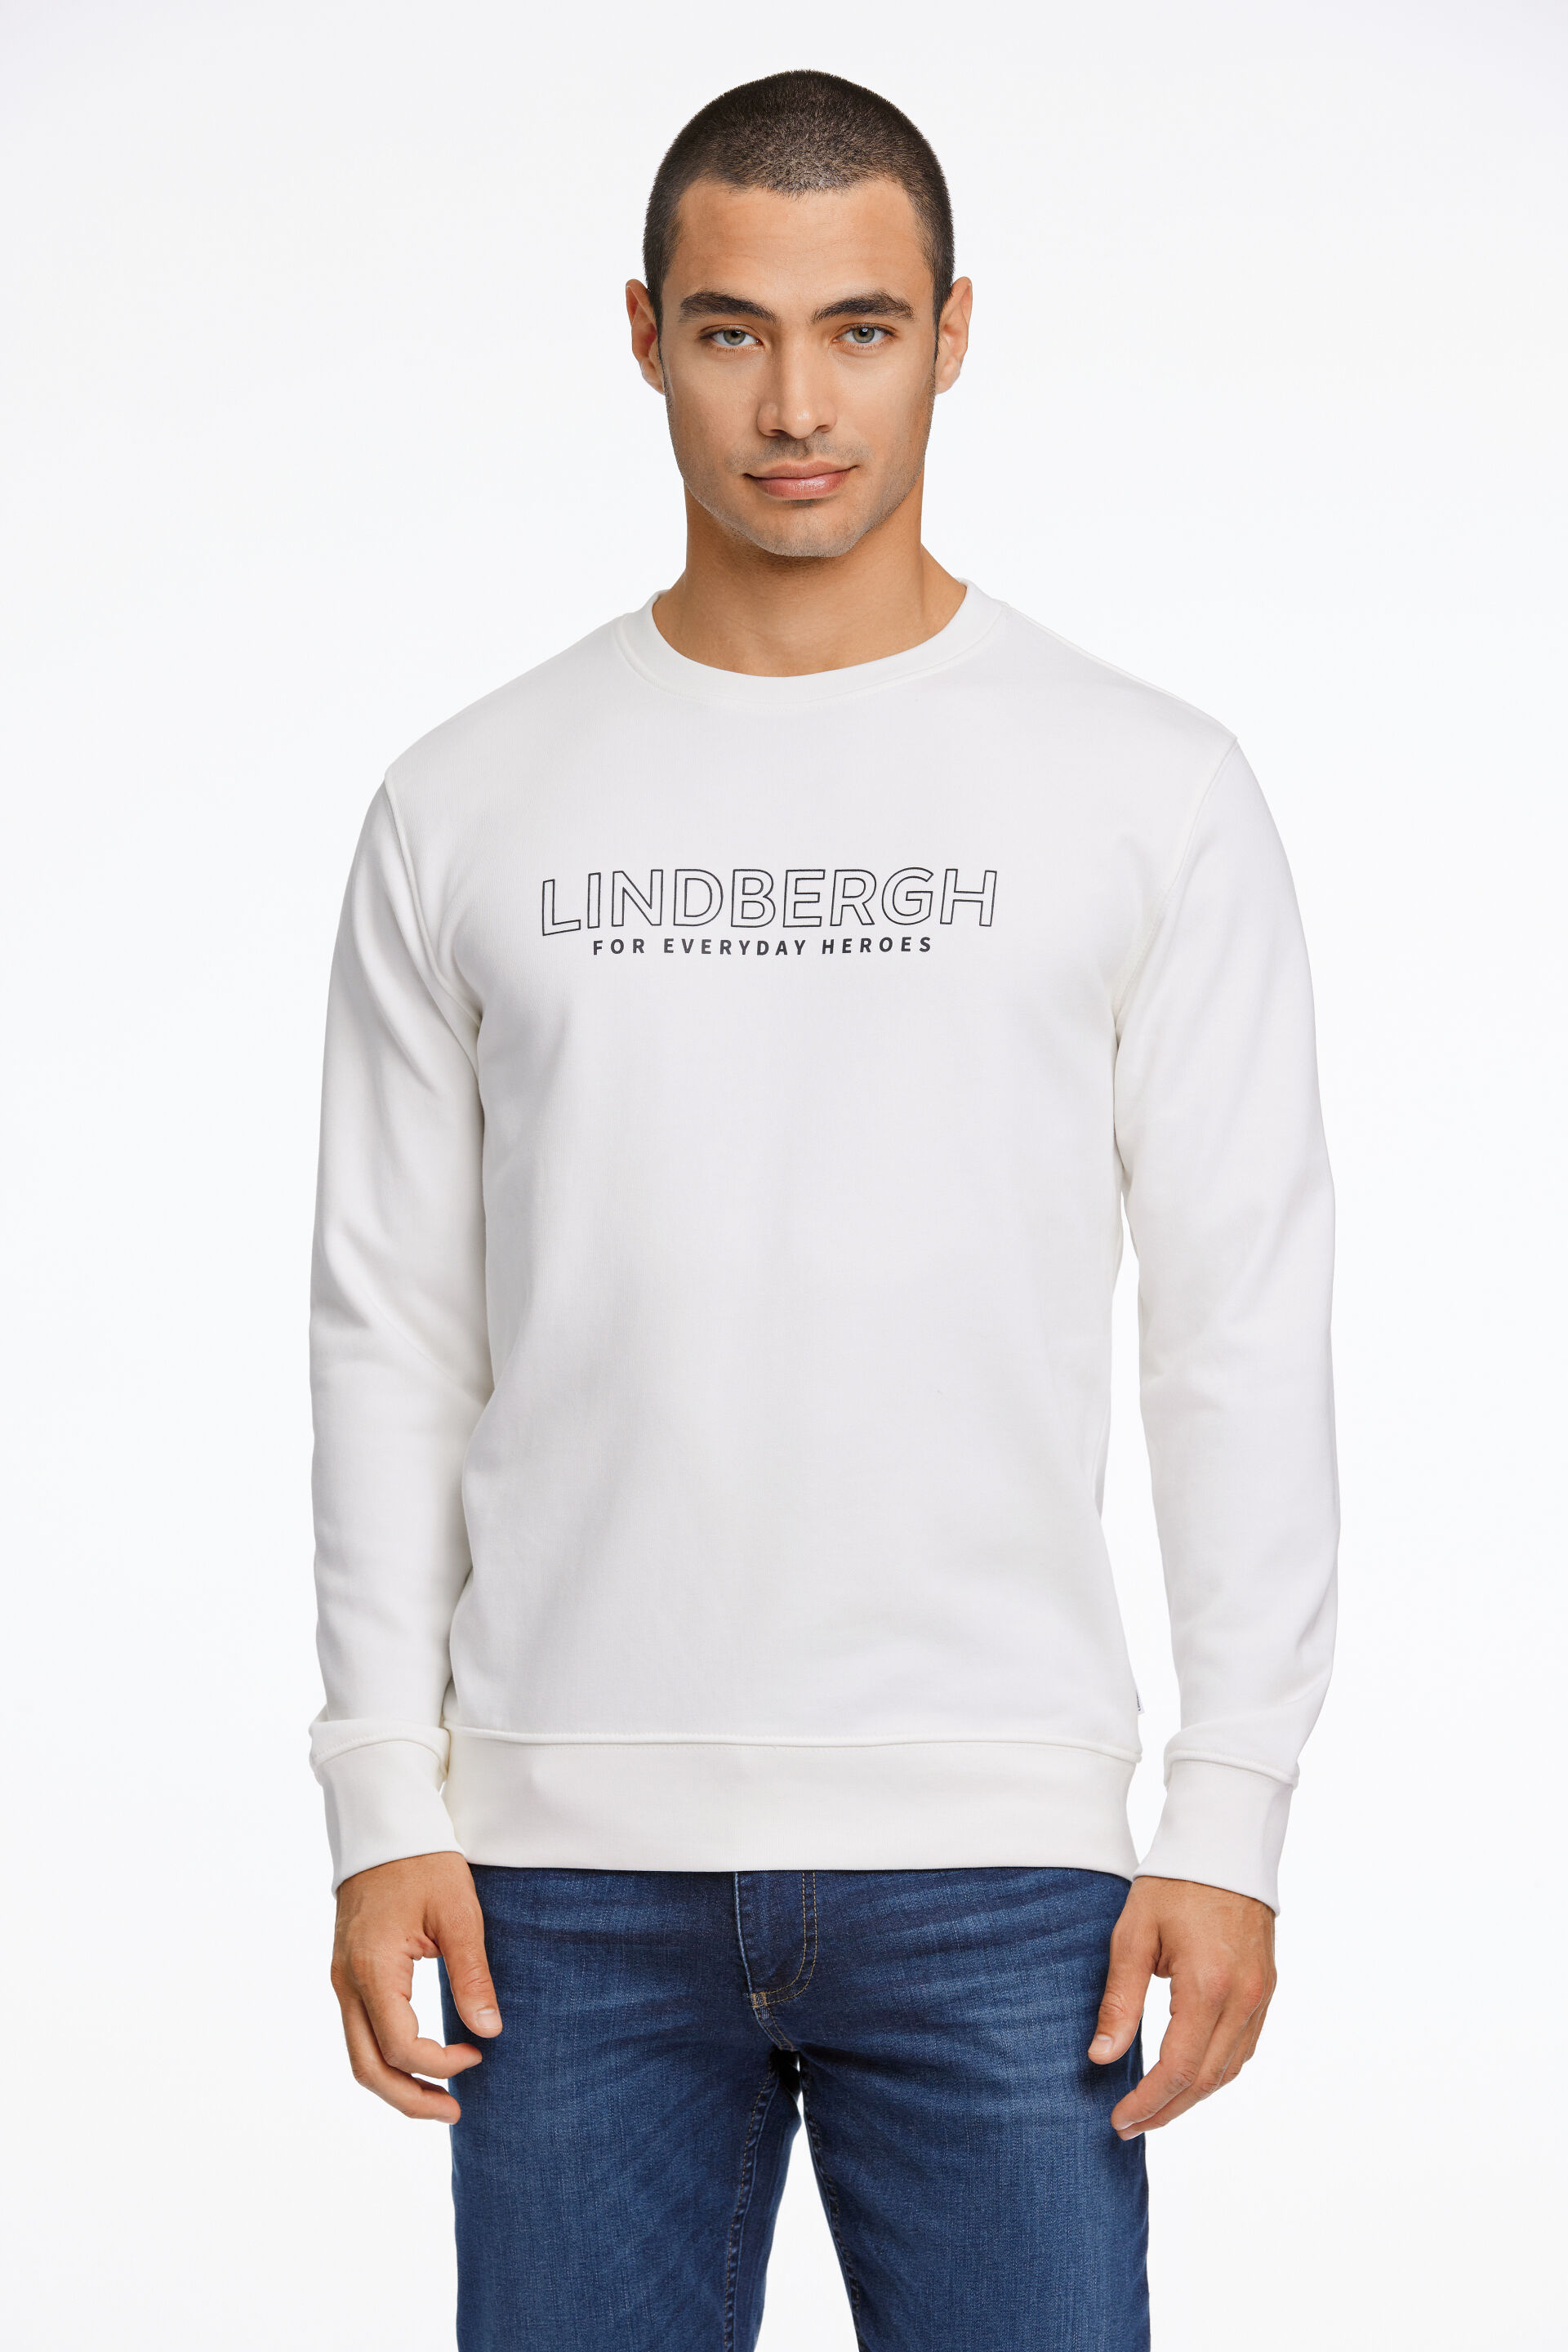 Lindbergh  Sweatshirt Hvid 30-705127